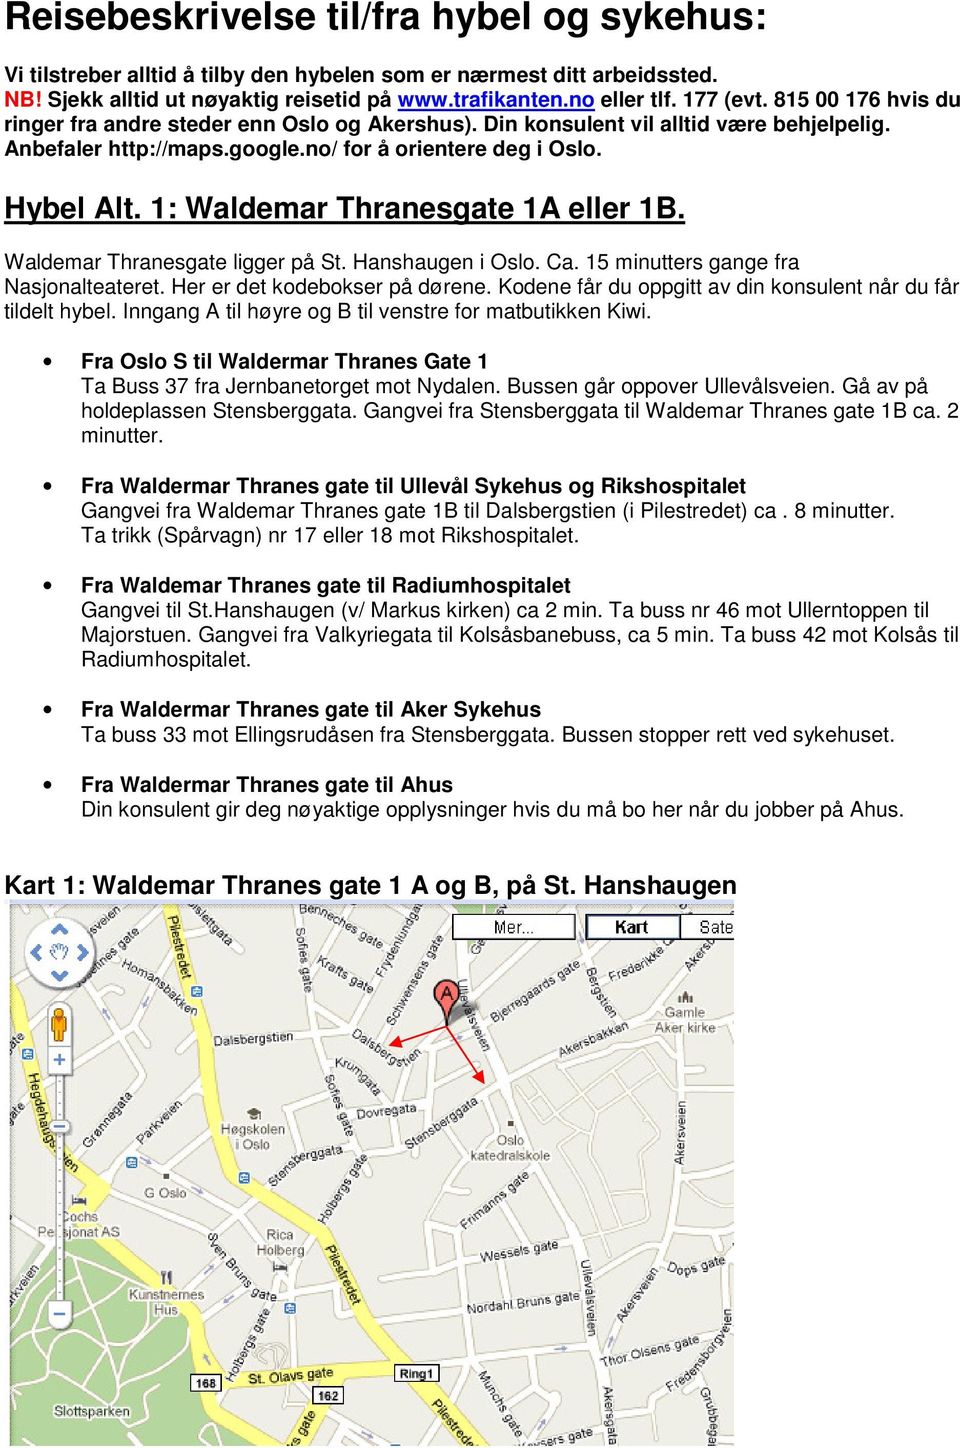 1: Waldemar Thranesgate 1A eller 1B. Waldemar Thranesgate ligger på St. Hanshaugen i Oslo. Ca. 15 minutters gange fra Nasjonalteateret. Her er det kodebokser på dørene.